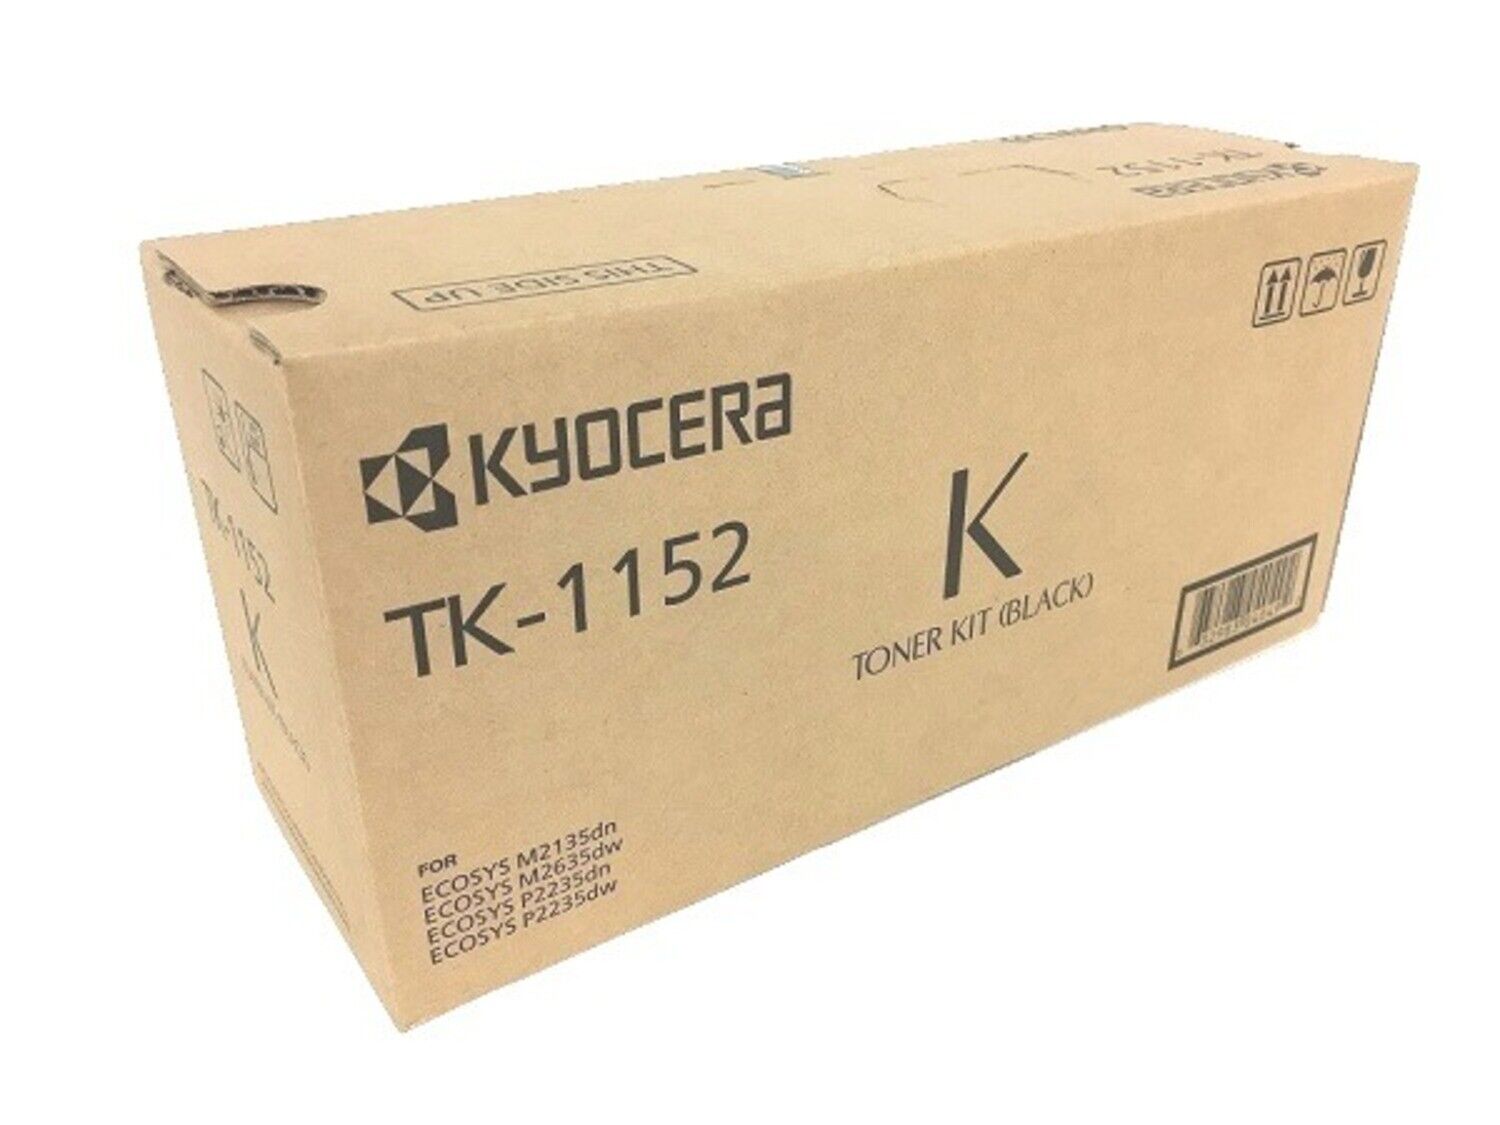 Genuine Kyocera 1T02RV0US0 Model TK-1152 Black Toner Kit for Ecosys P2235dw/M263